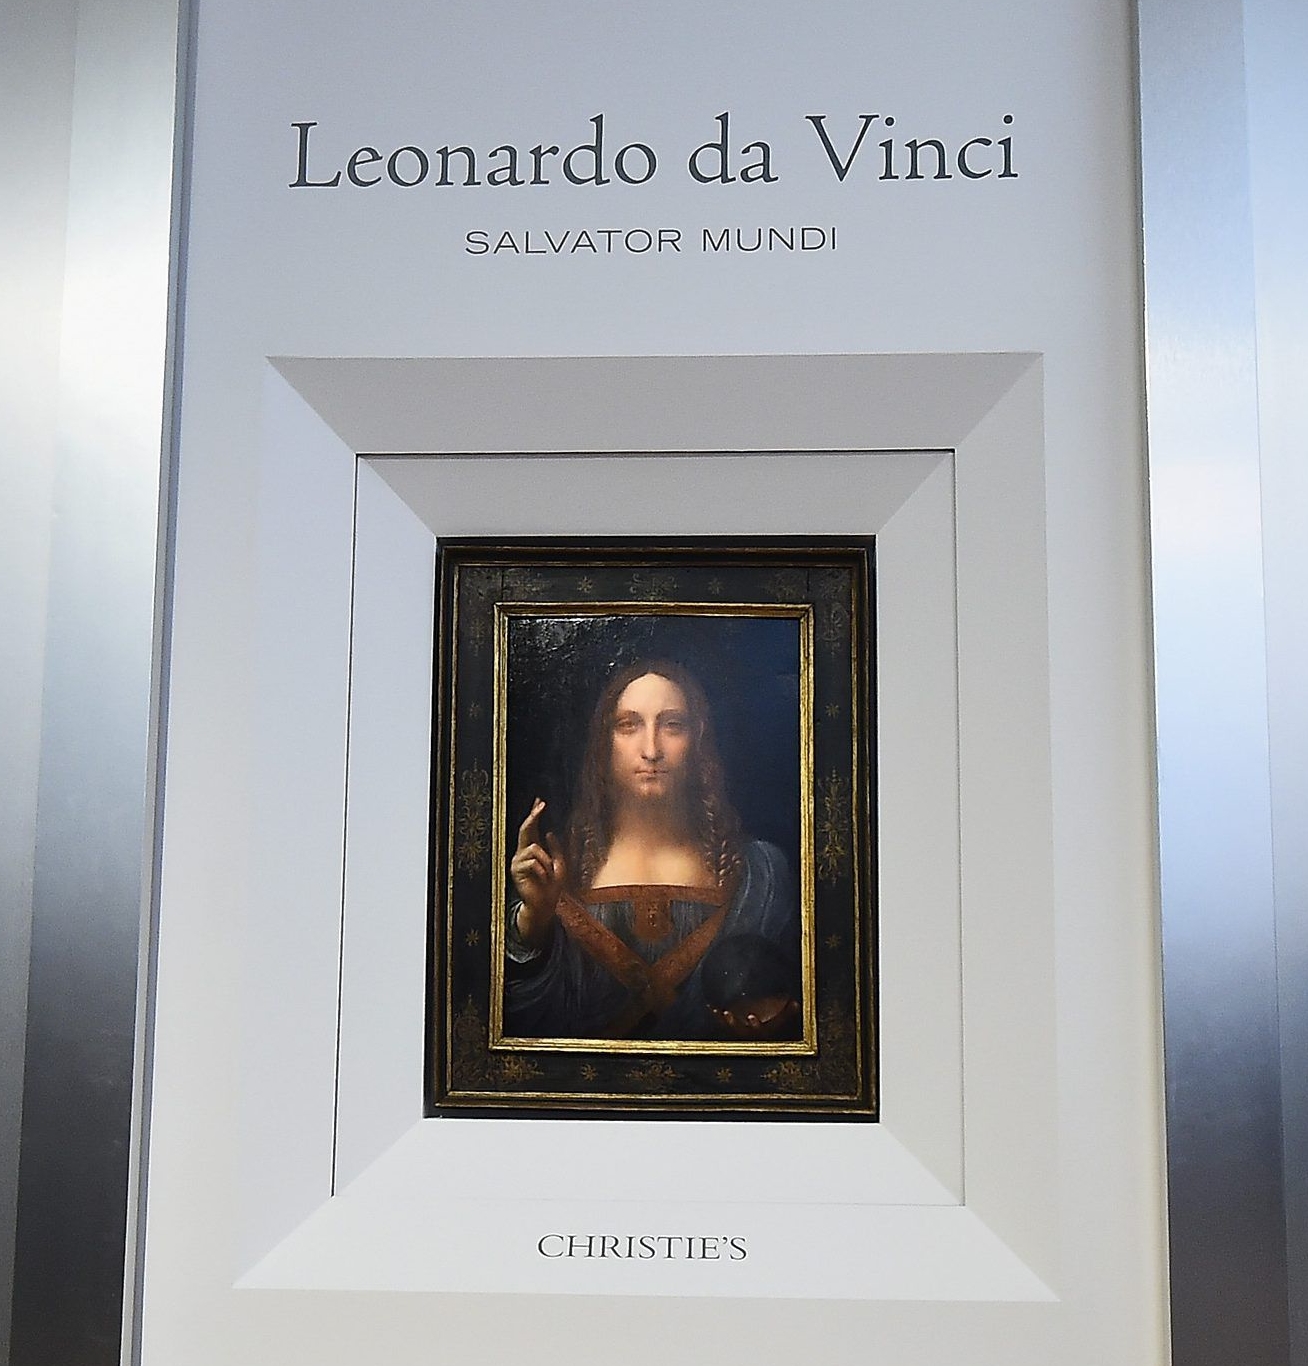 Leonardo+da+Vinci-1452-1519 (868).jpg